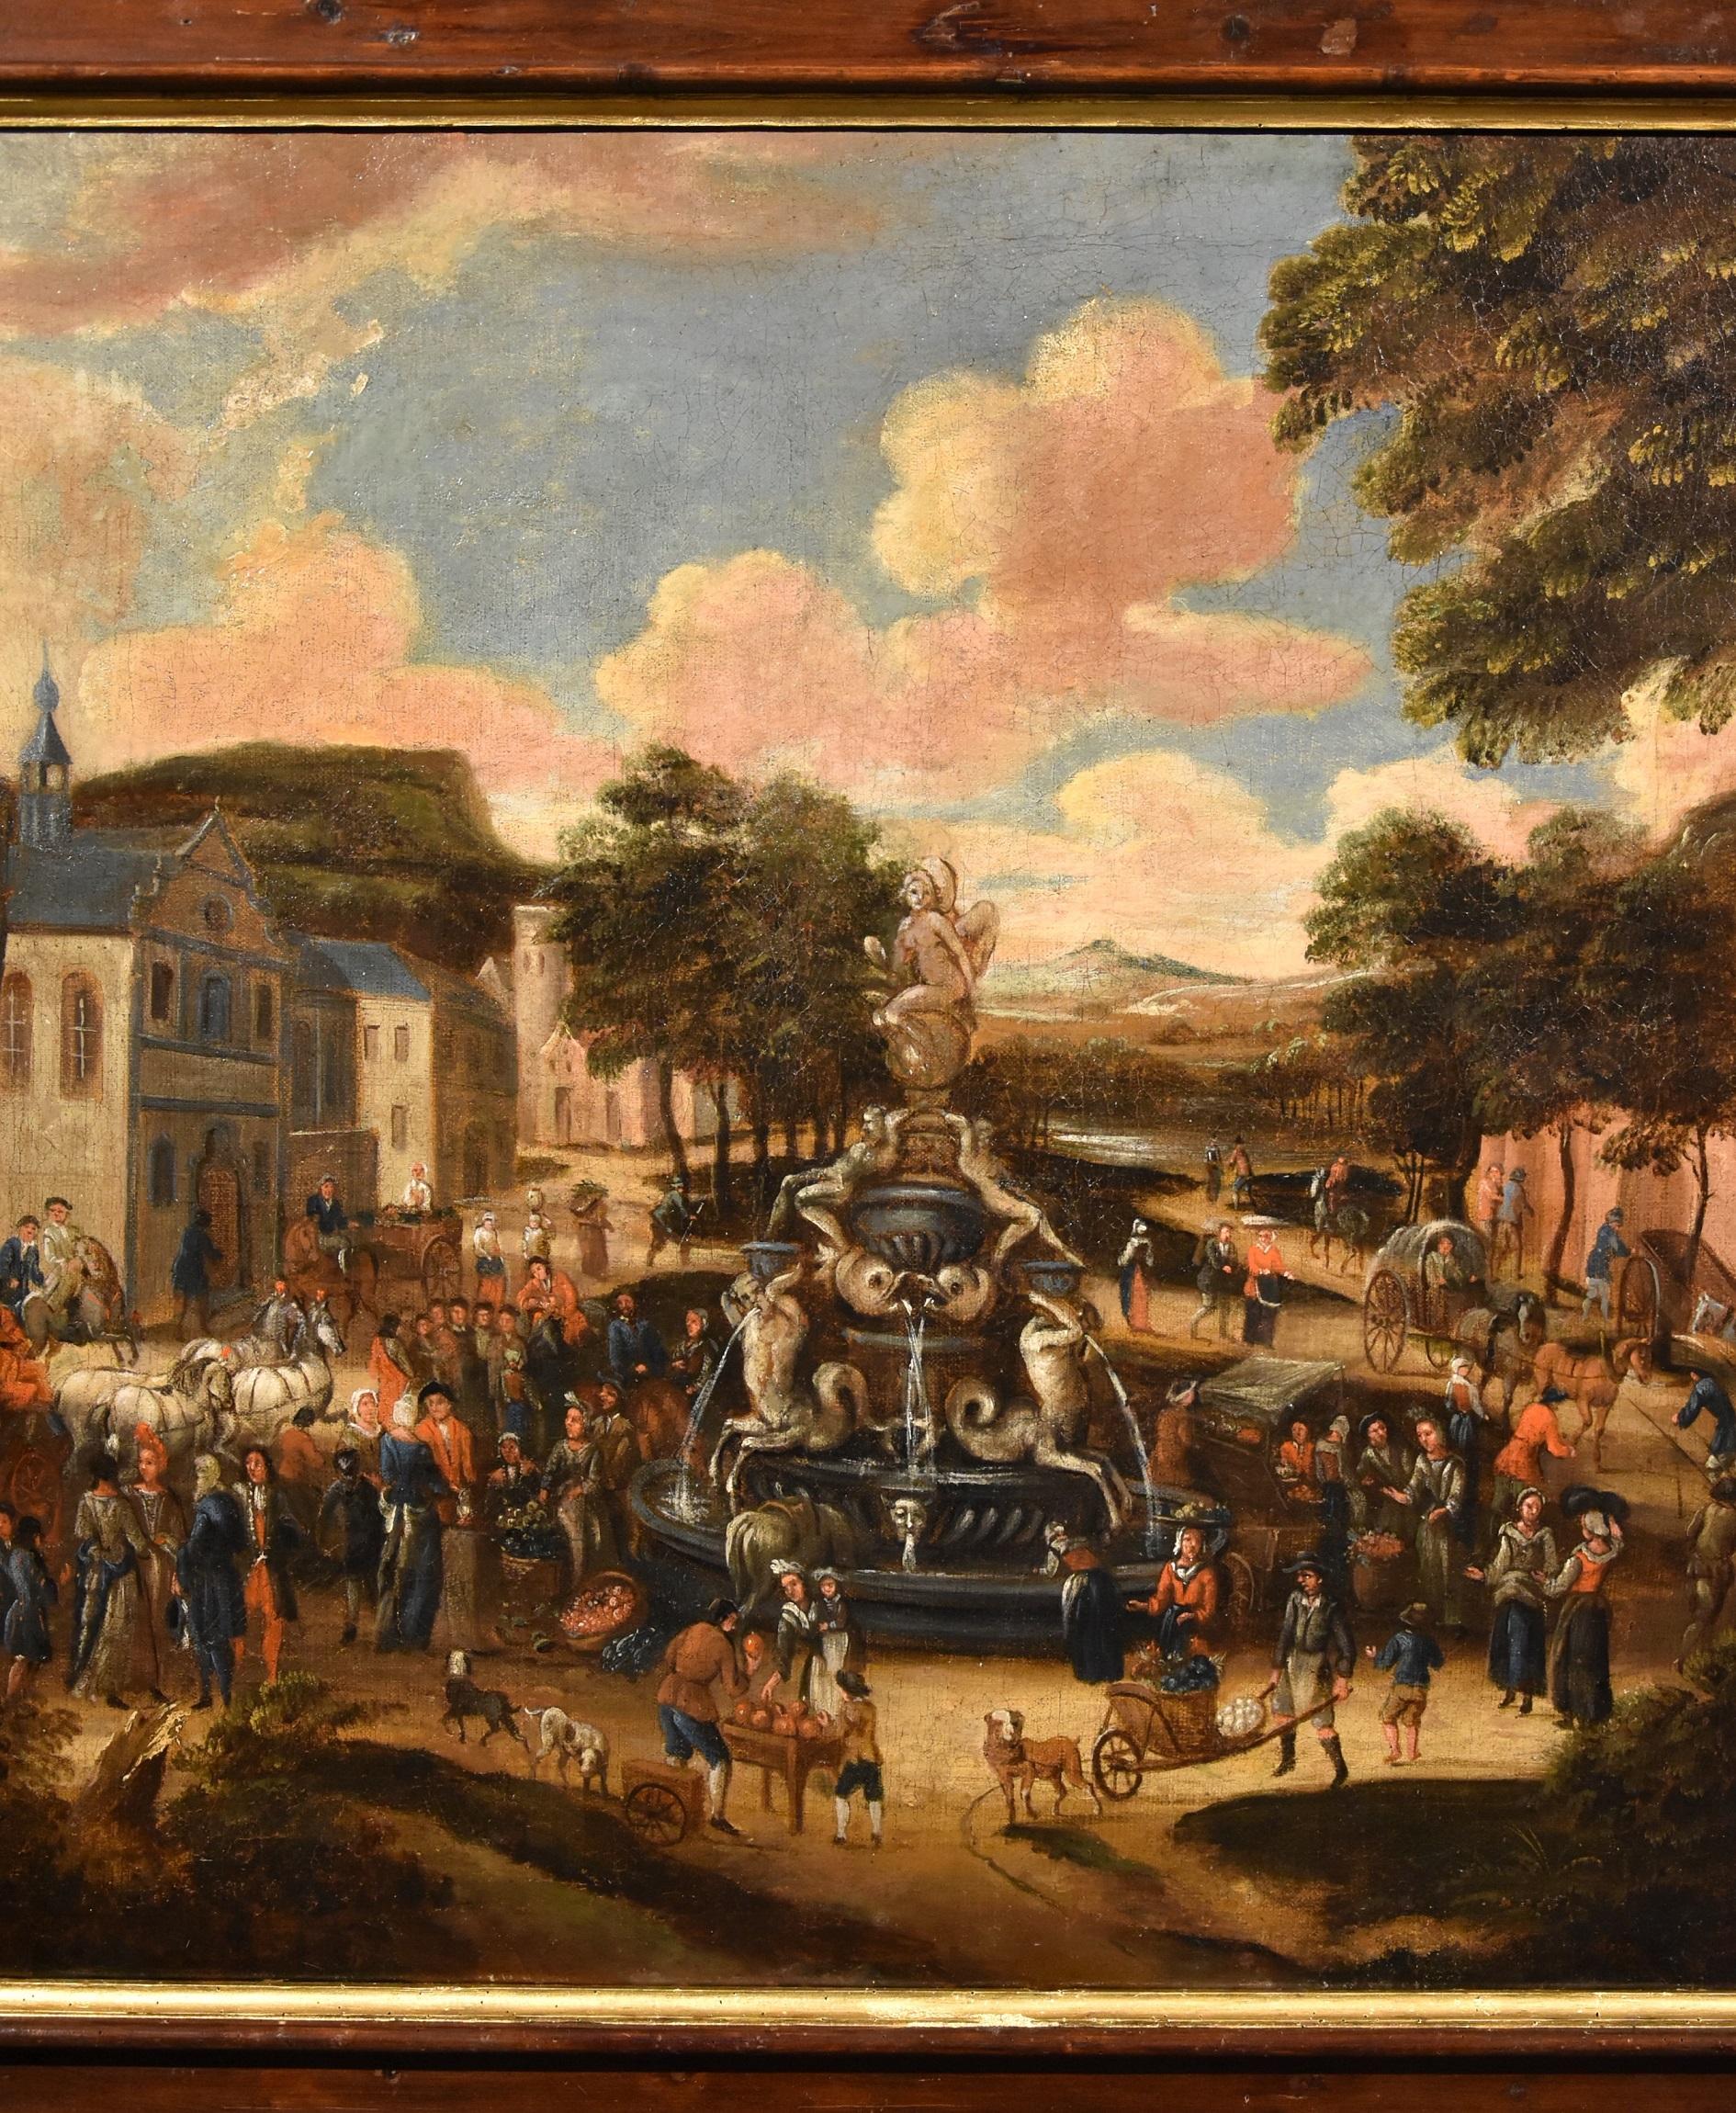 Landscape Village Market Paint Oil on canvas Old master 18th Century Flemish Art - Brown Landscape Painting by Circle of Pieter van Bredael (Antwerp 1629 - 1719)